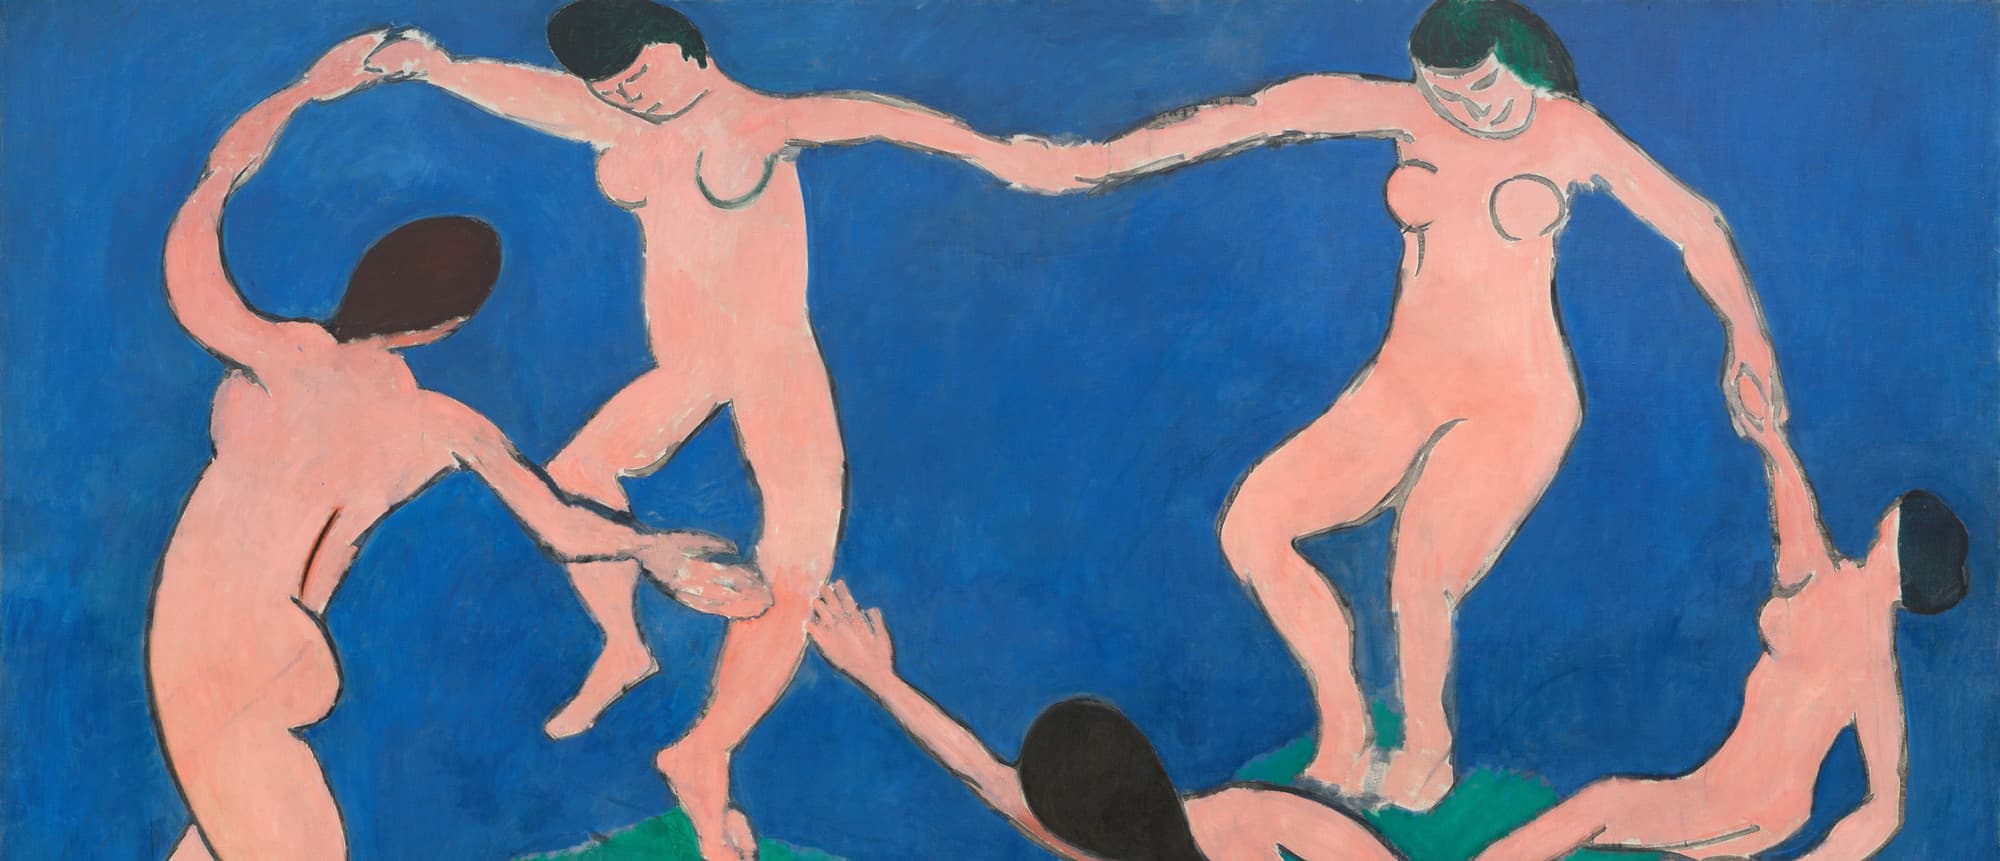 Henri Matisse's Dance (1909)